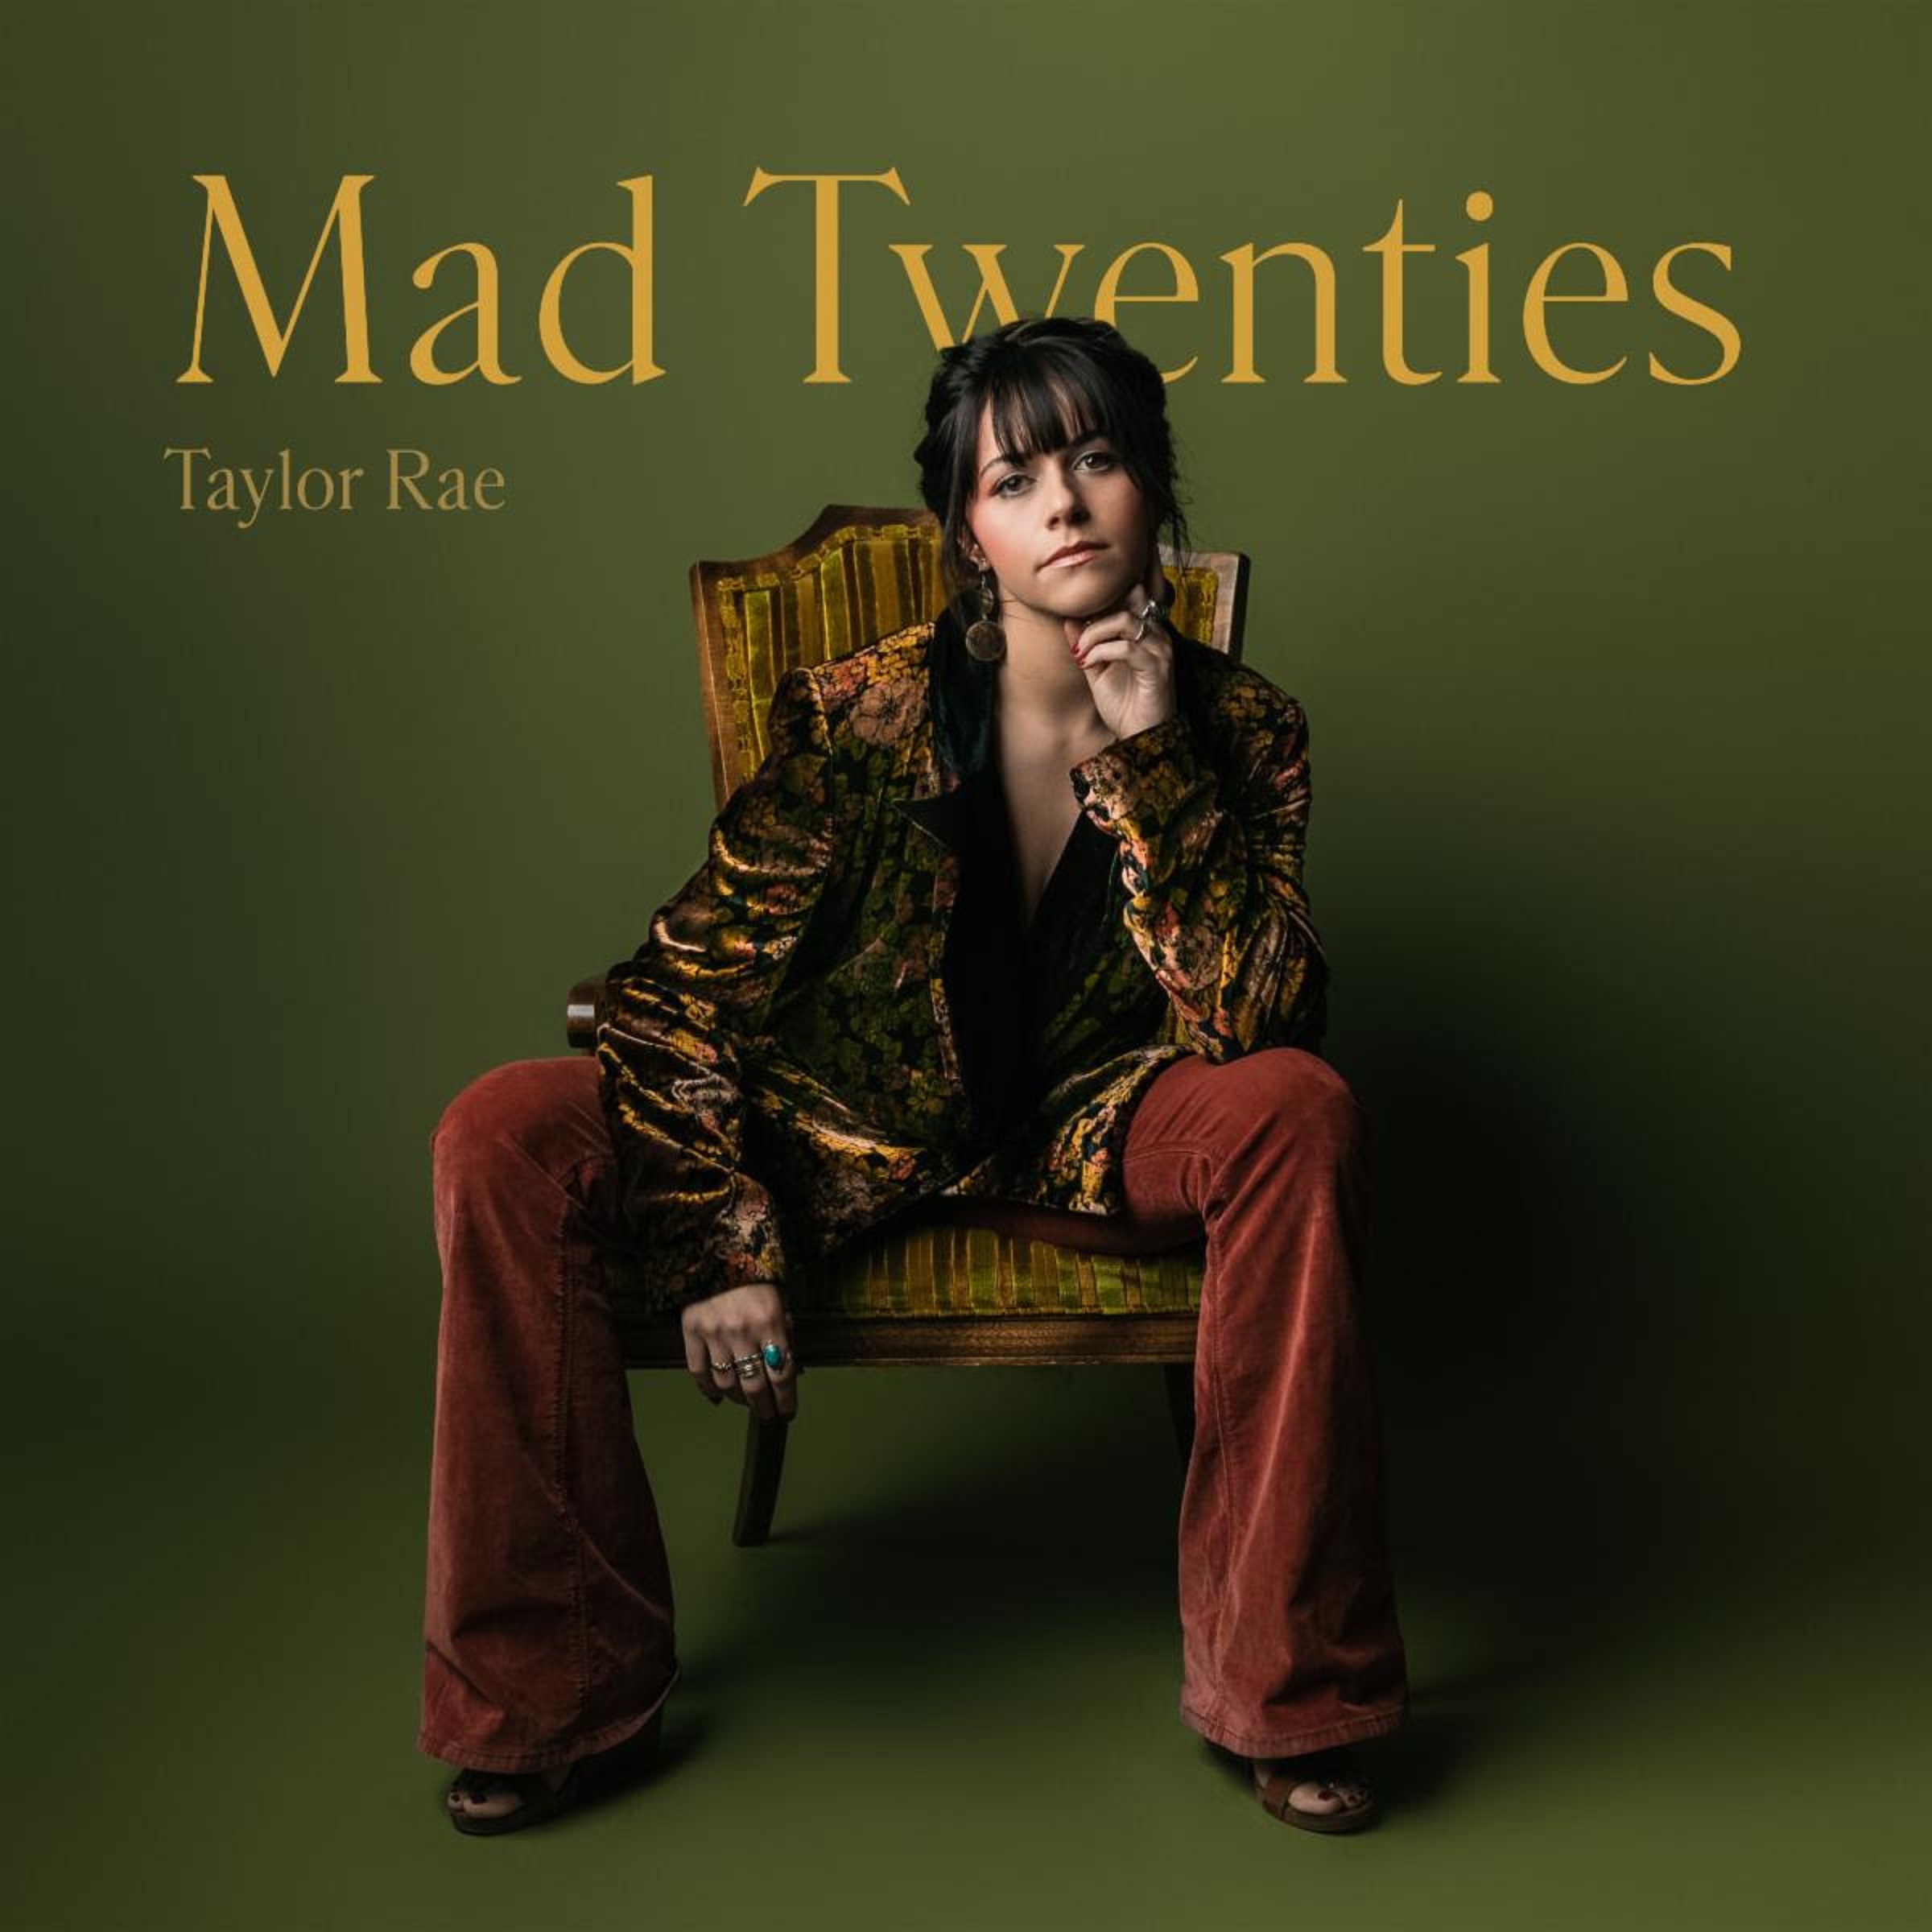  Taylor Rae’s Debut CD, MAD TWENTIES, Marks 20 Weeks On AMA Americana Radio Albums Chart